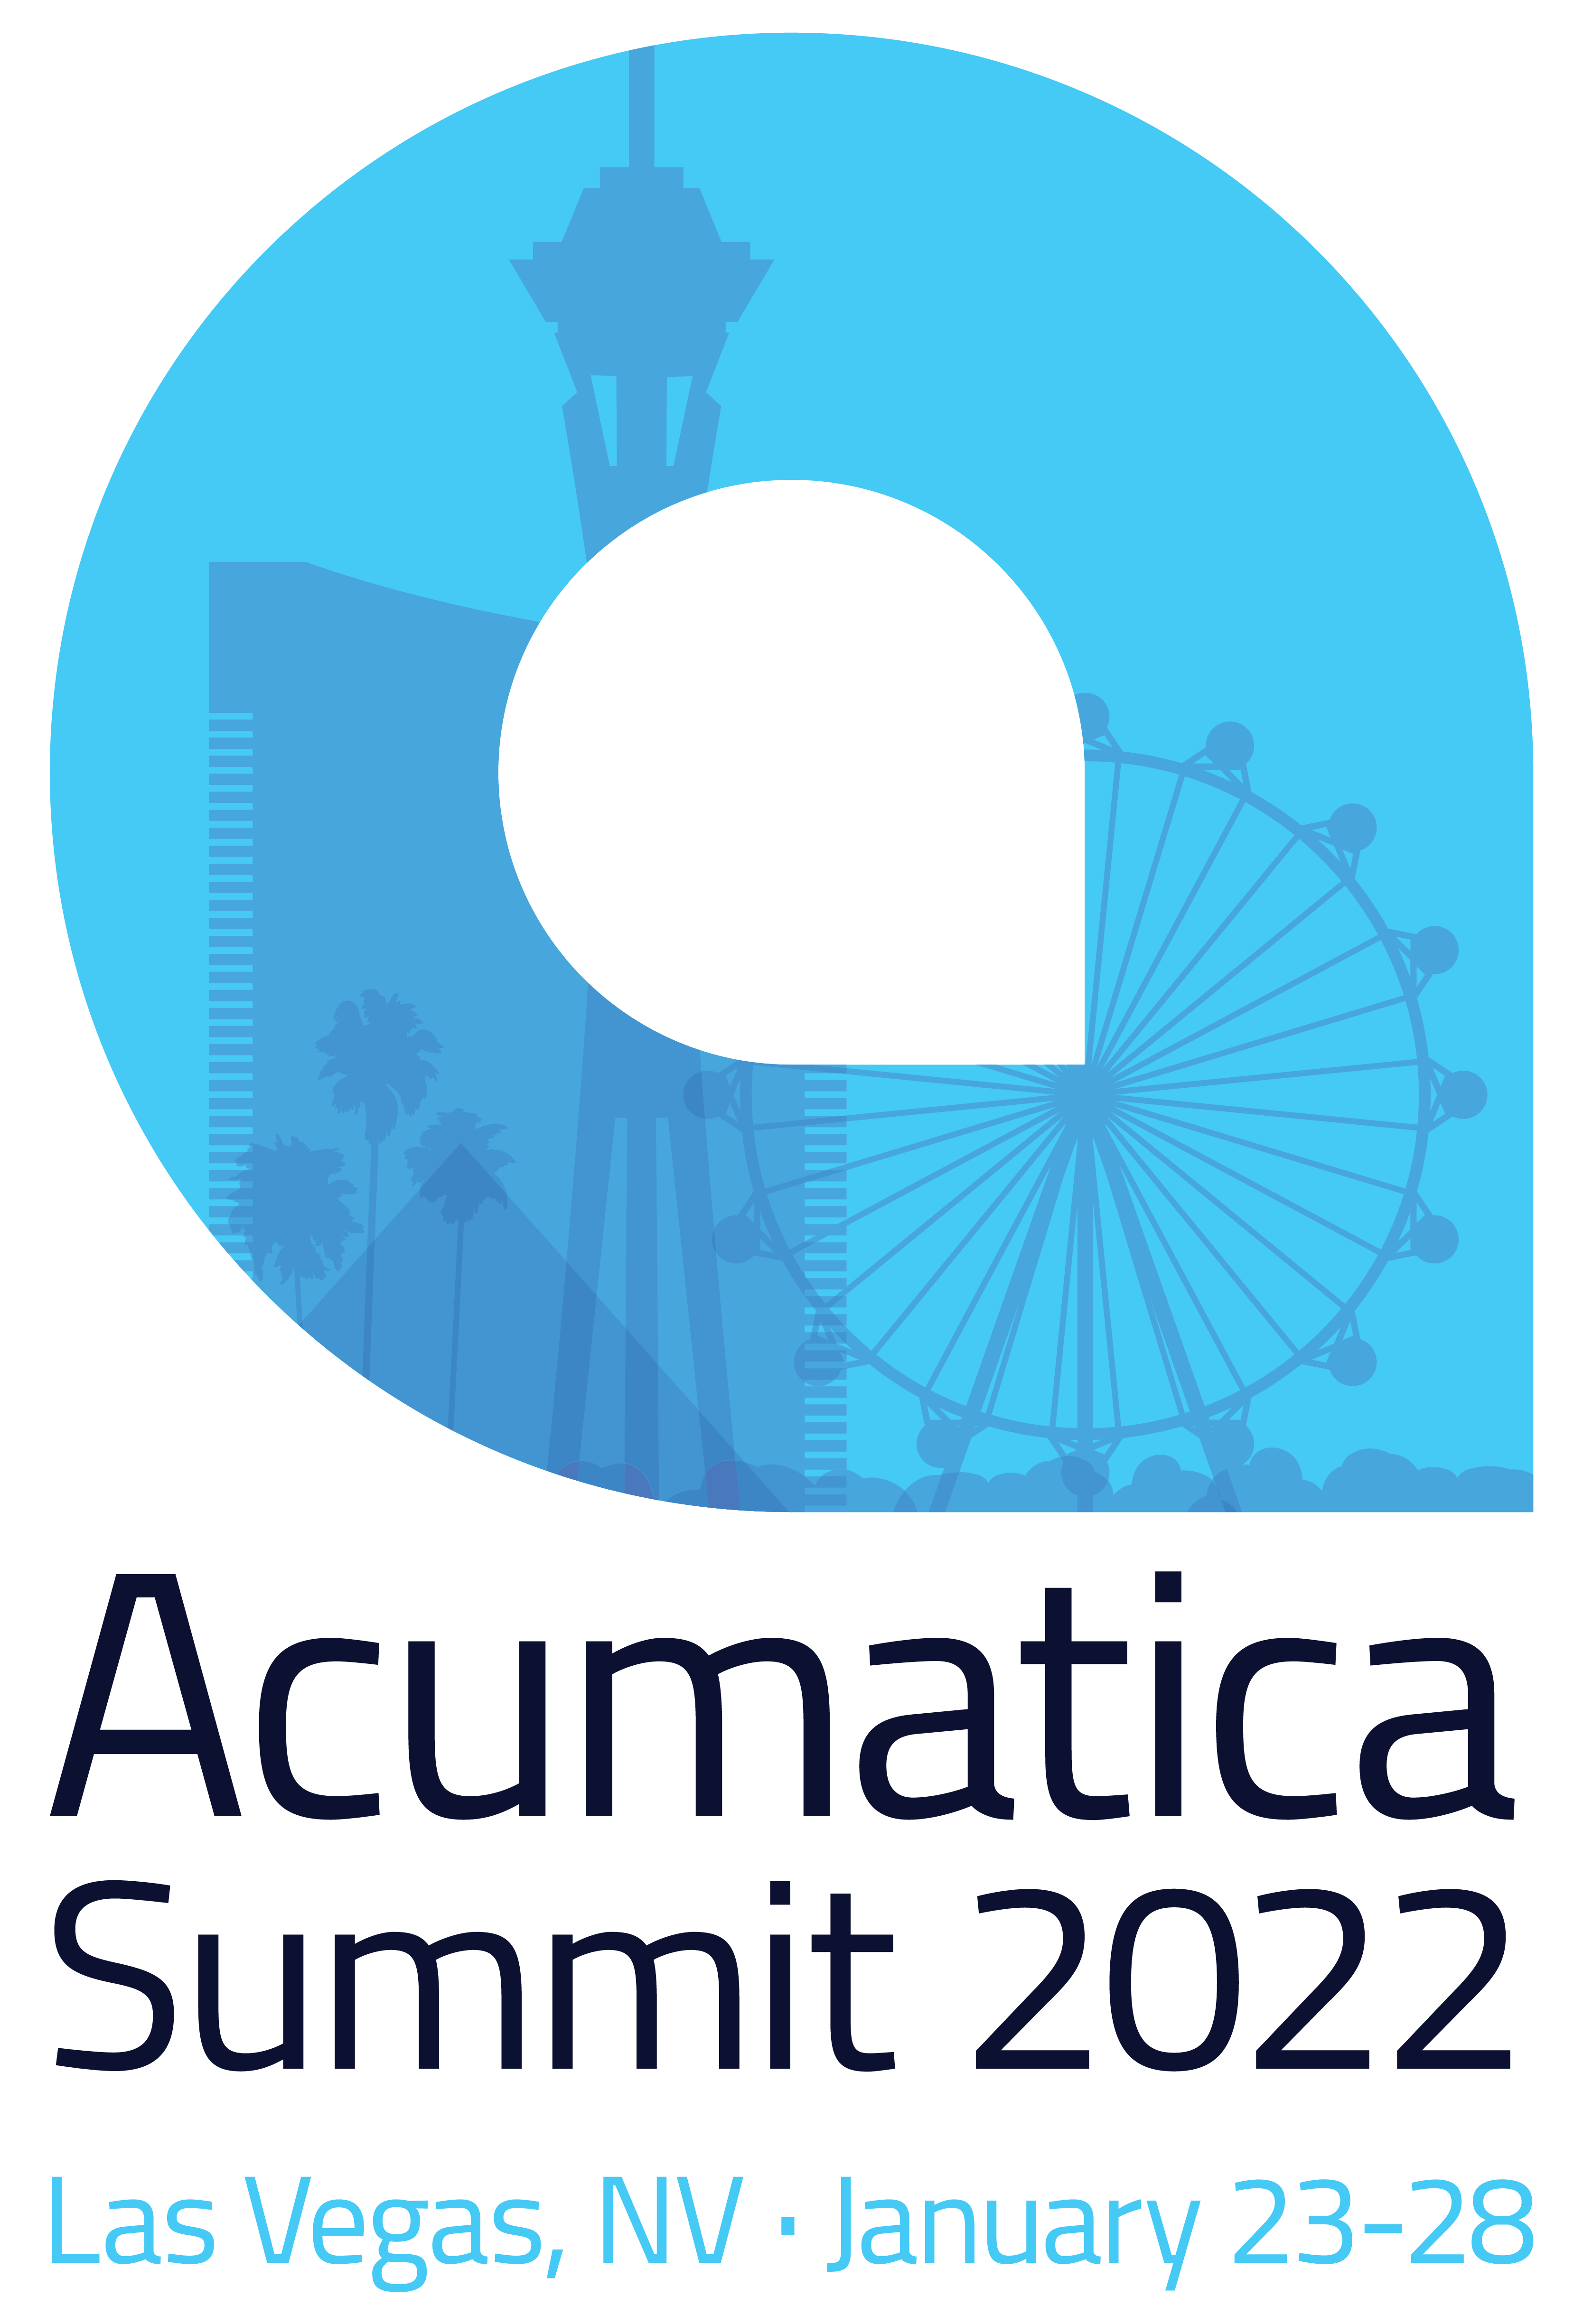 Acumatica Summit 2022: Don't Miss Early Bird Registration